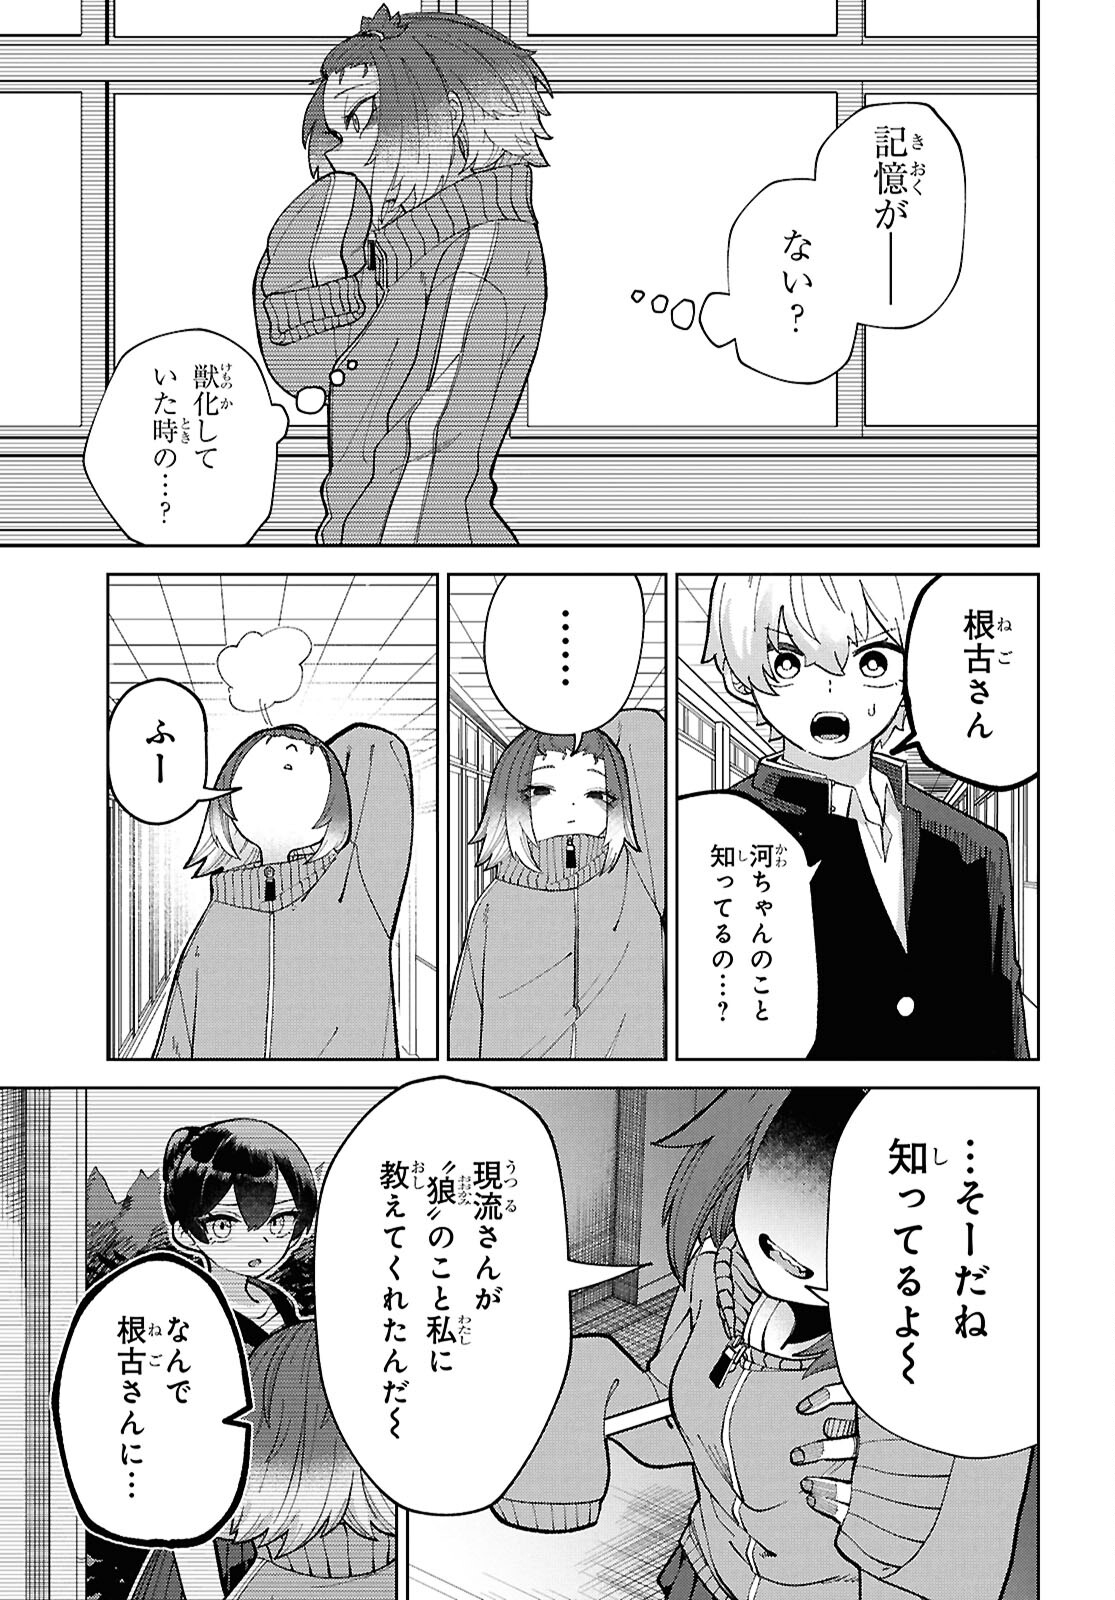 Garuru Girl - Chapter 4 - Page 19